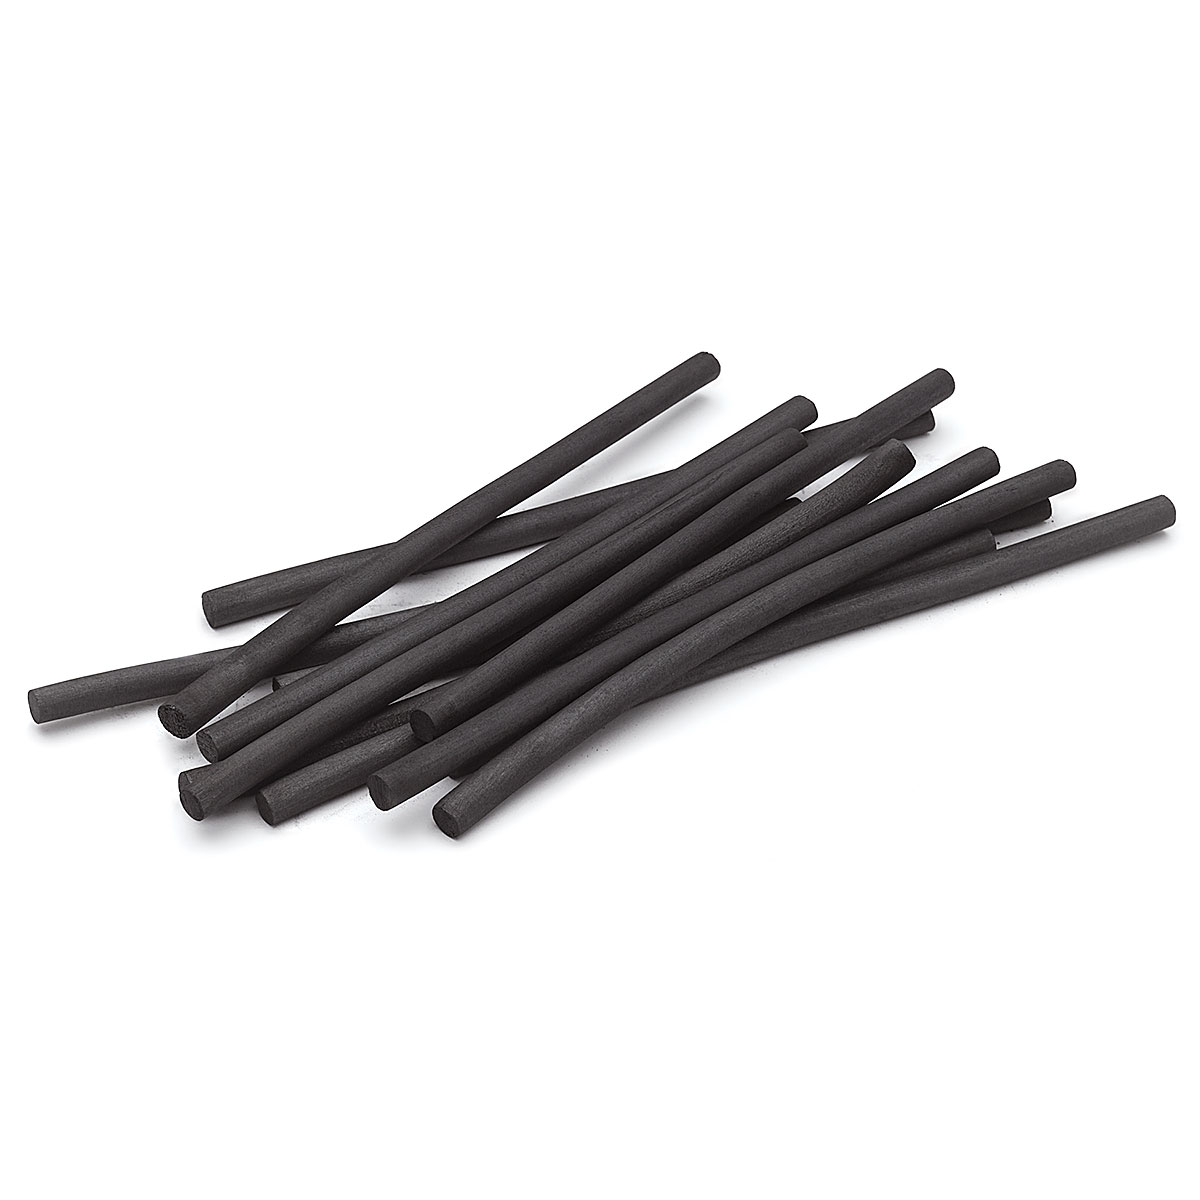  XHBTS Vine Charcoal, Soft, Black Charcoal Sticks for